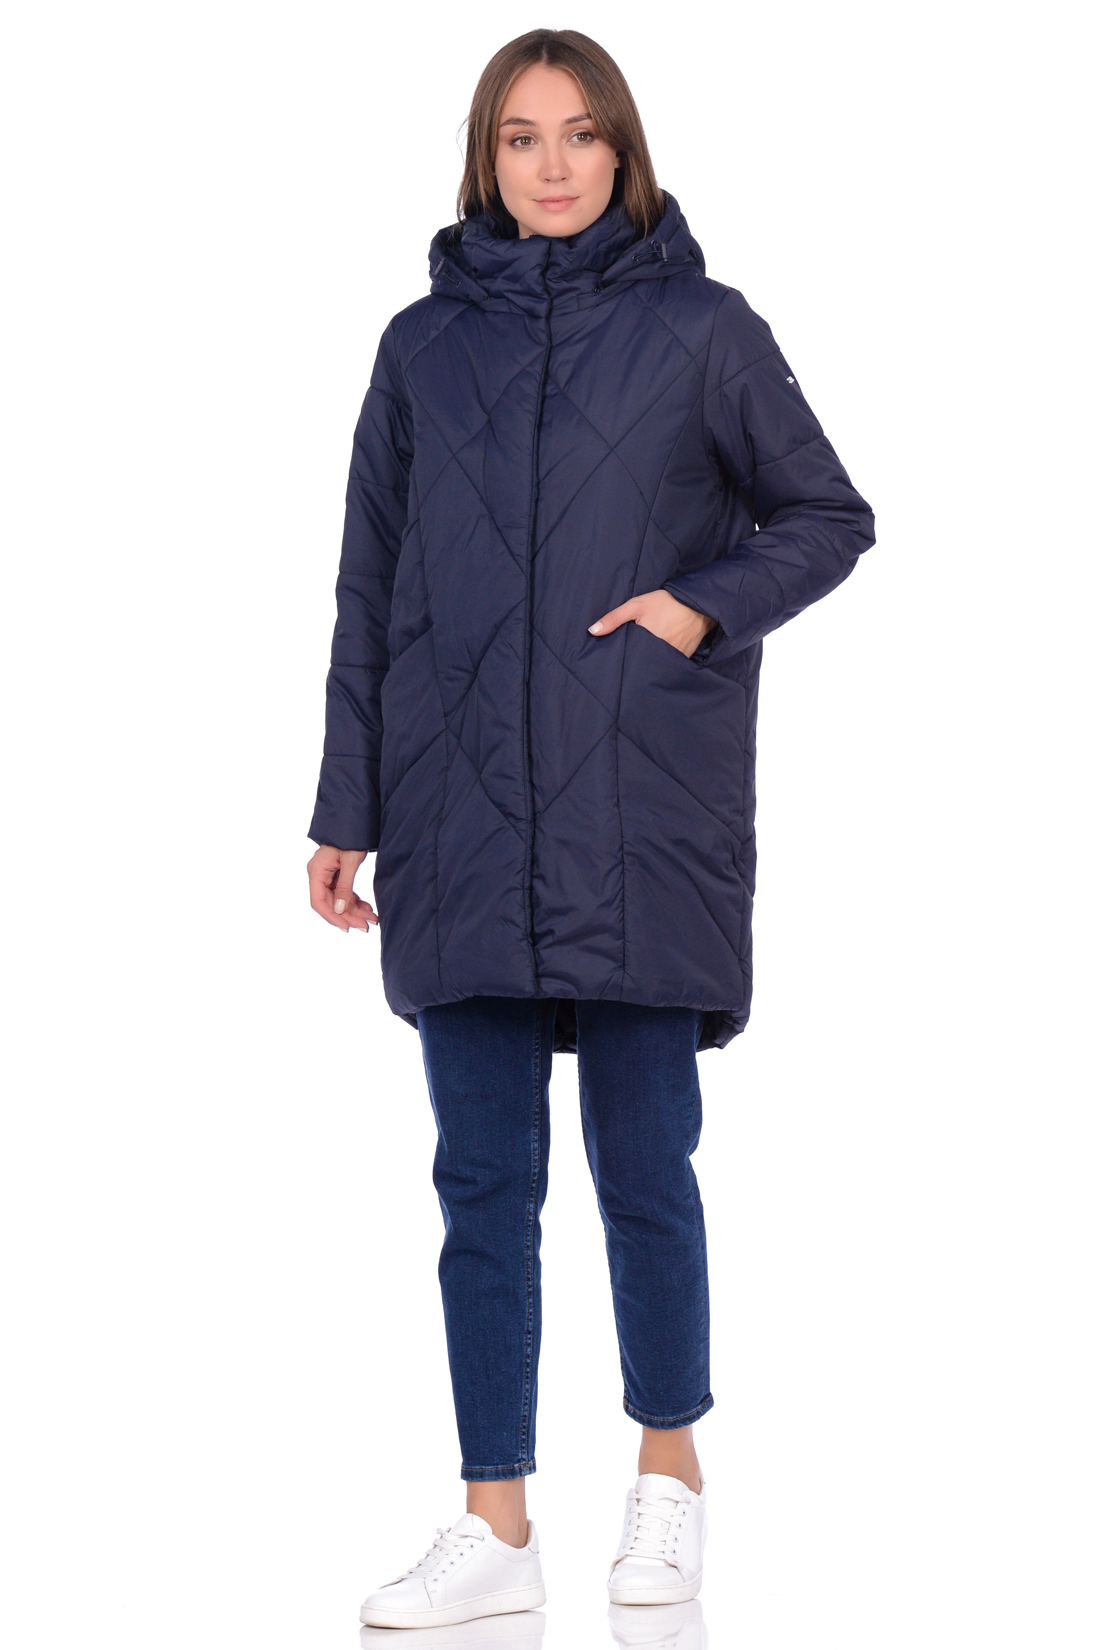 Куртка-парка с крупной простёжкой (арт. baon B039551), размер L, цвет синий Куртка-парка с крупной простёжкой (арт. baon B039551) - фото 1